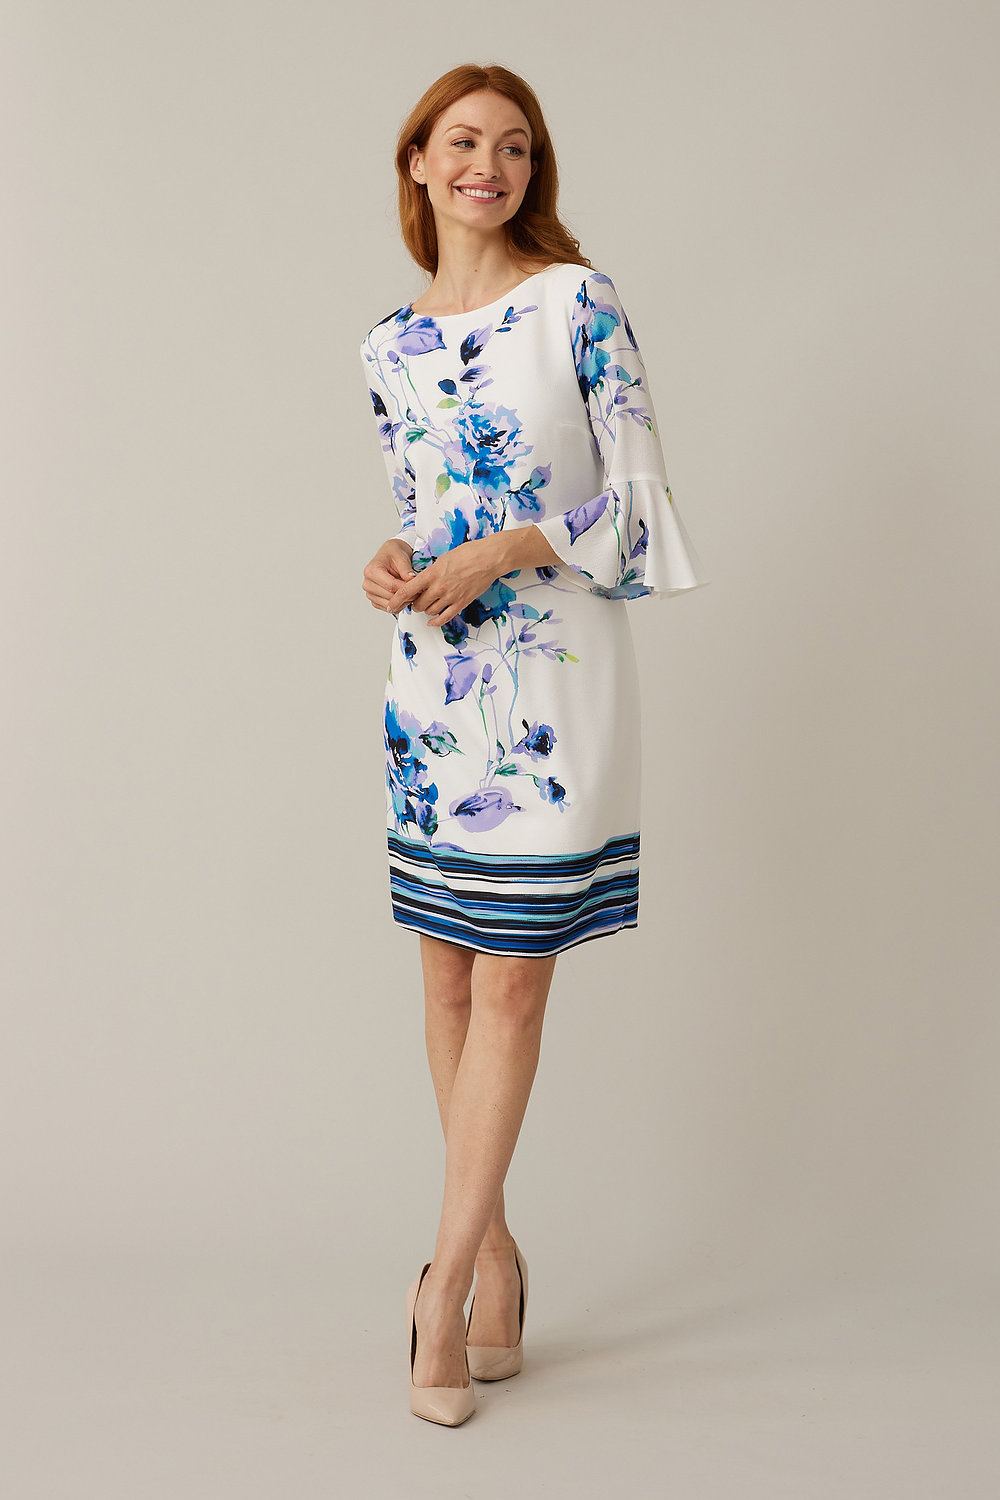 Joseph Ribkoff Floral Dress Style 221161. Vanilla/multi